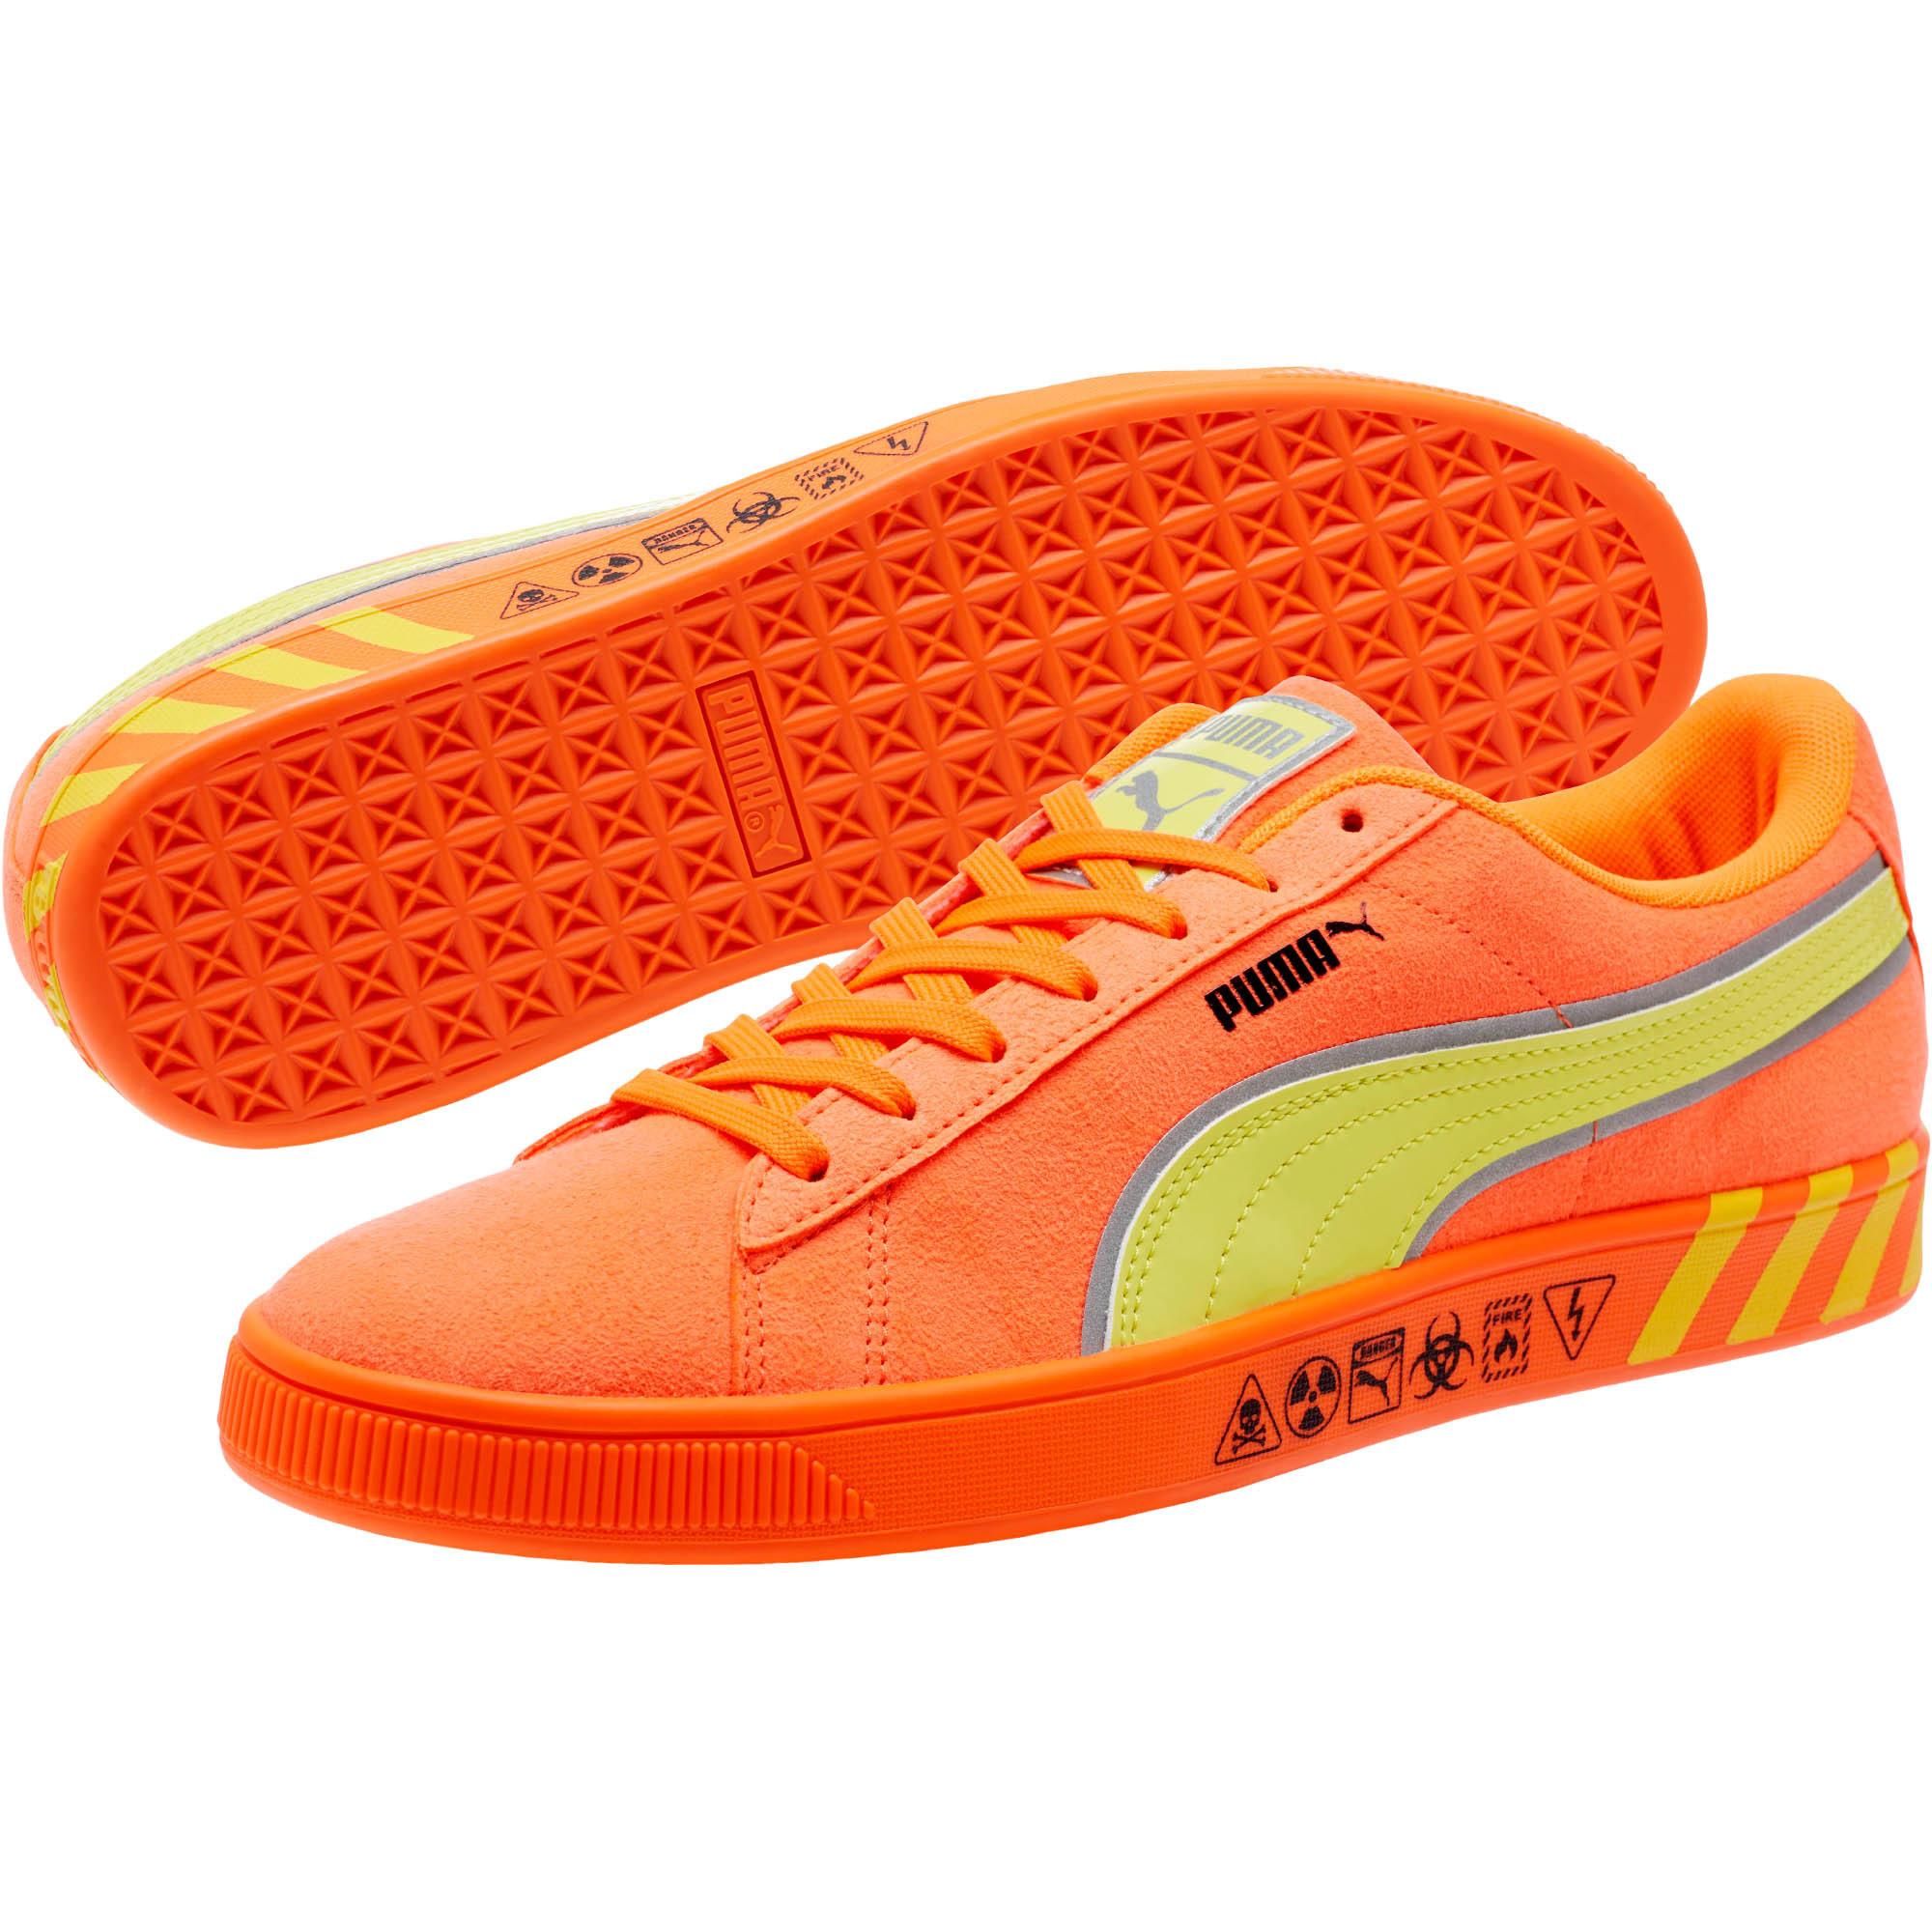 PUMA Hazard Orange Suede Sneakers for Men - Lyst